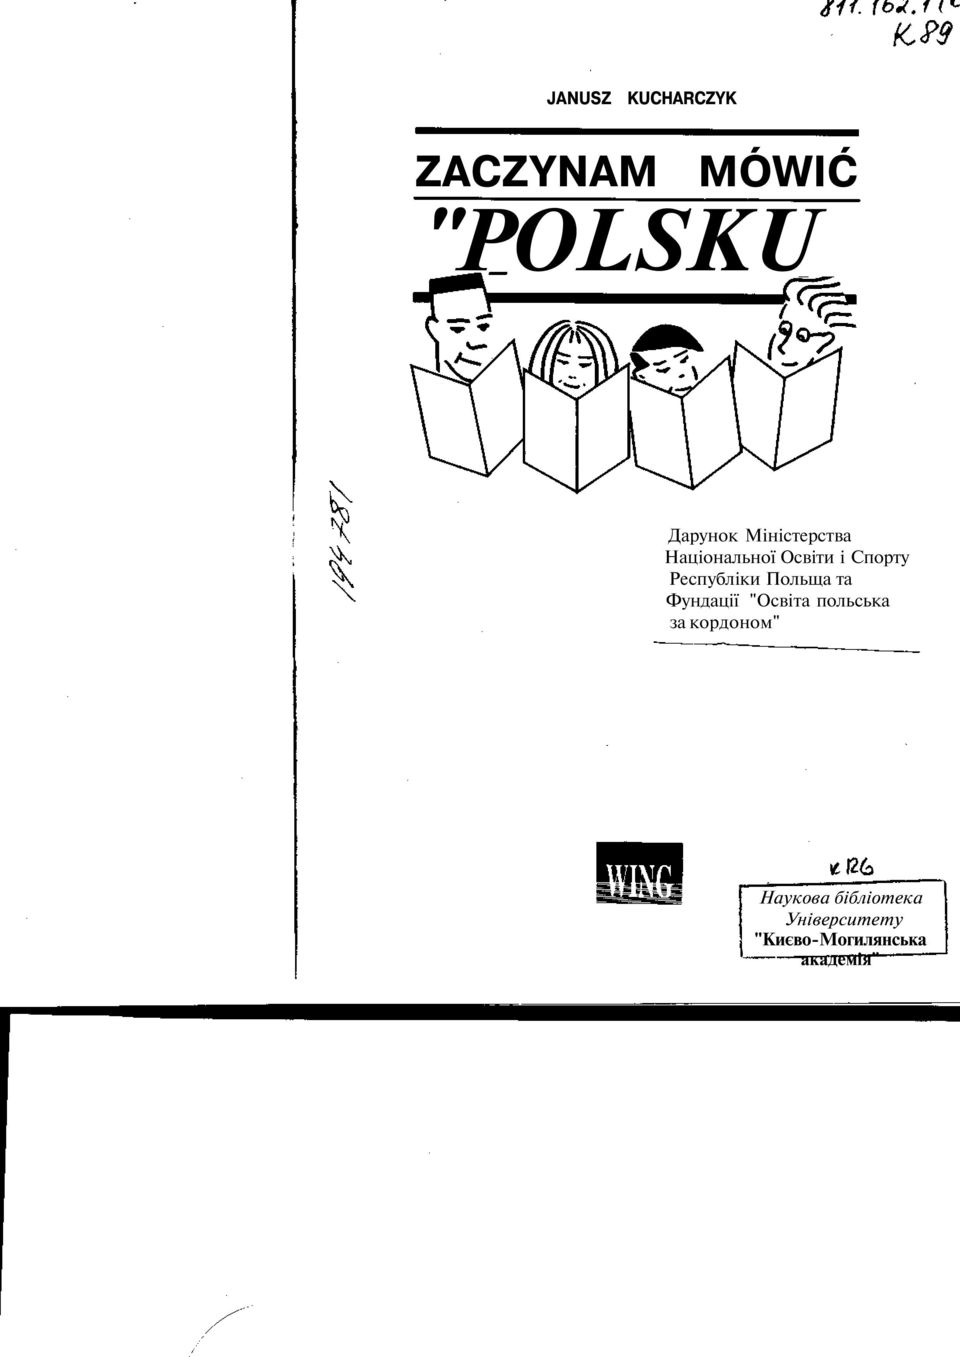 Польща та Фундації "Освіта польська за кордоном"